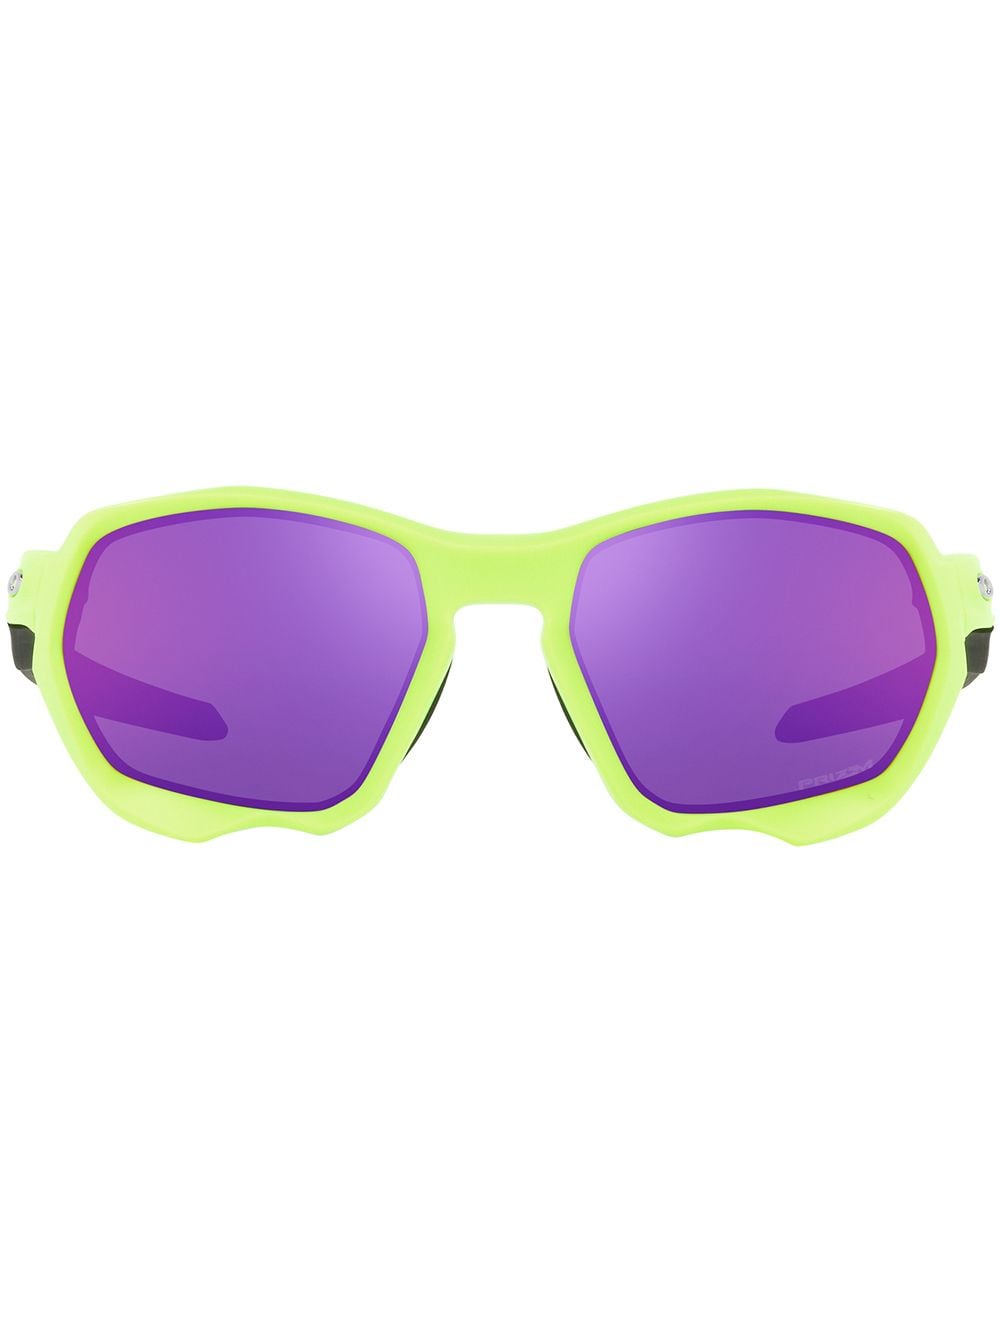 Lime green acetate Plazma tinted sunglasses